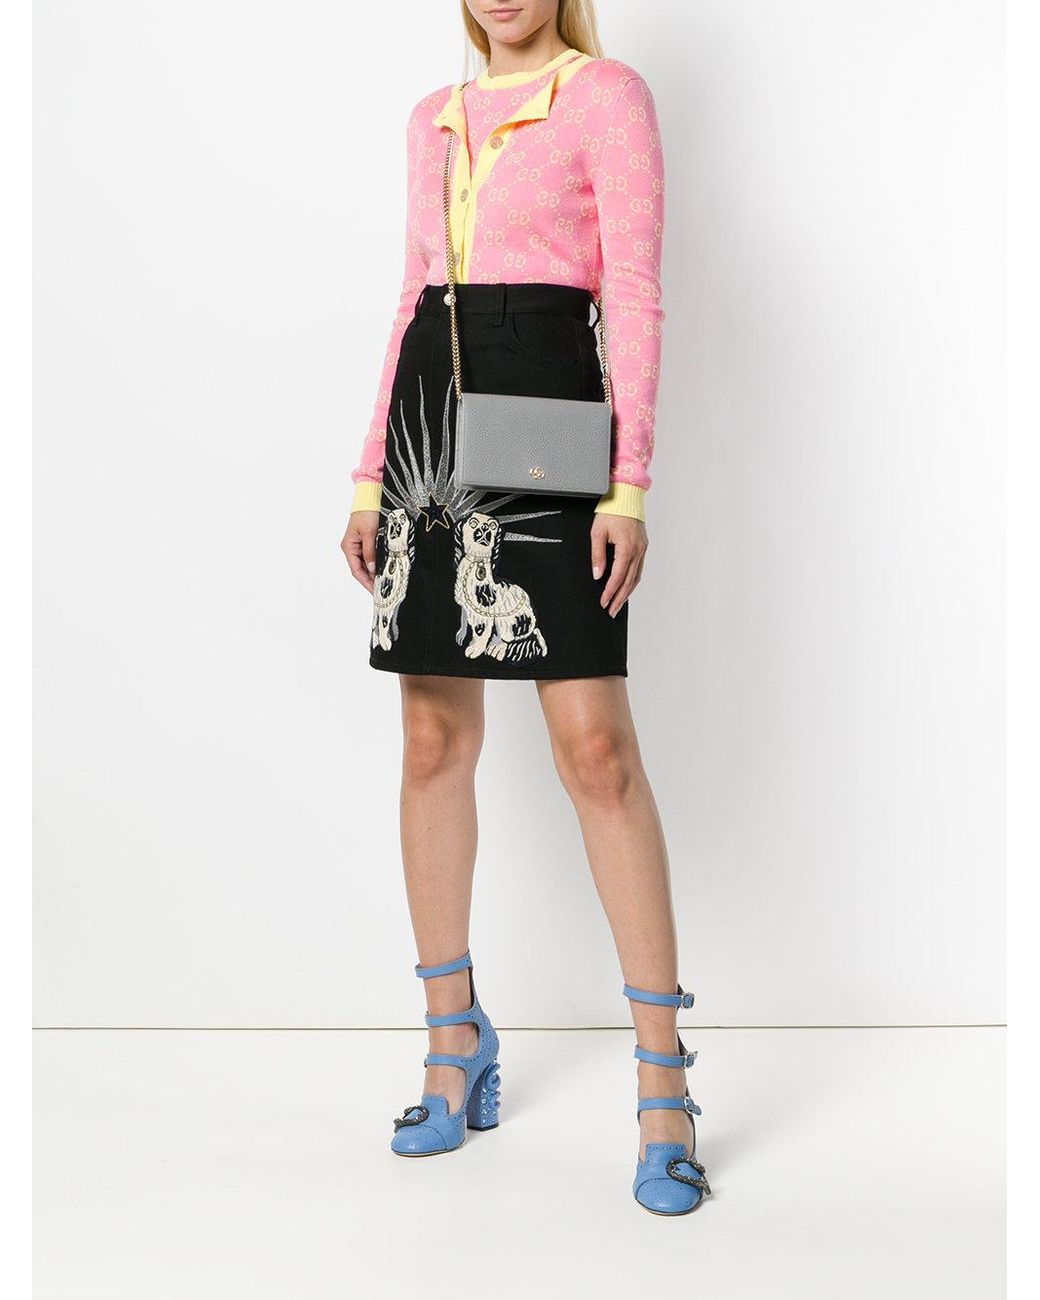 Gucci Grey GG Marmont Mini Chain Bag, Leather